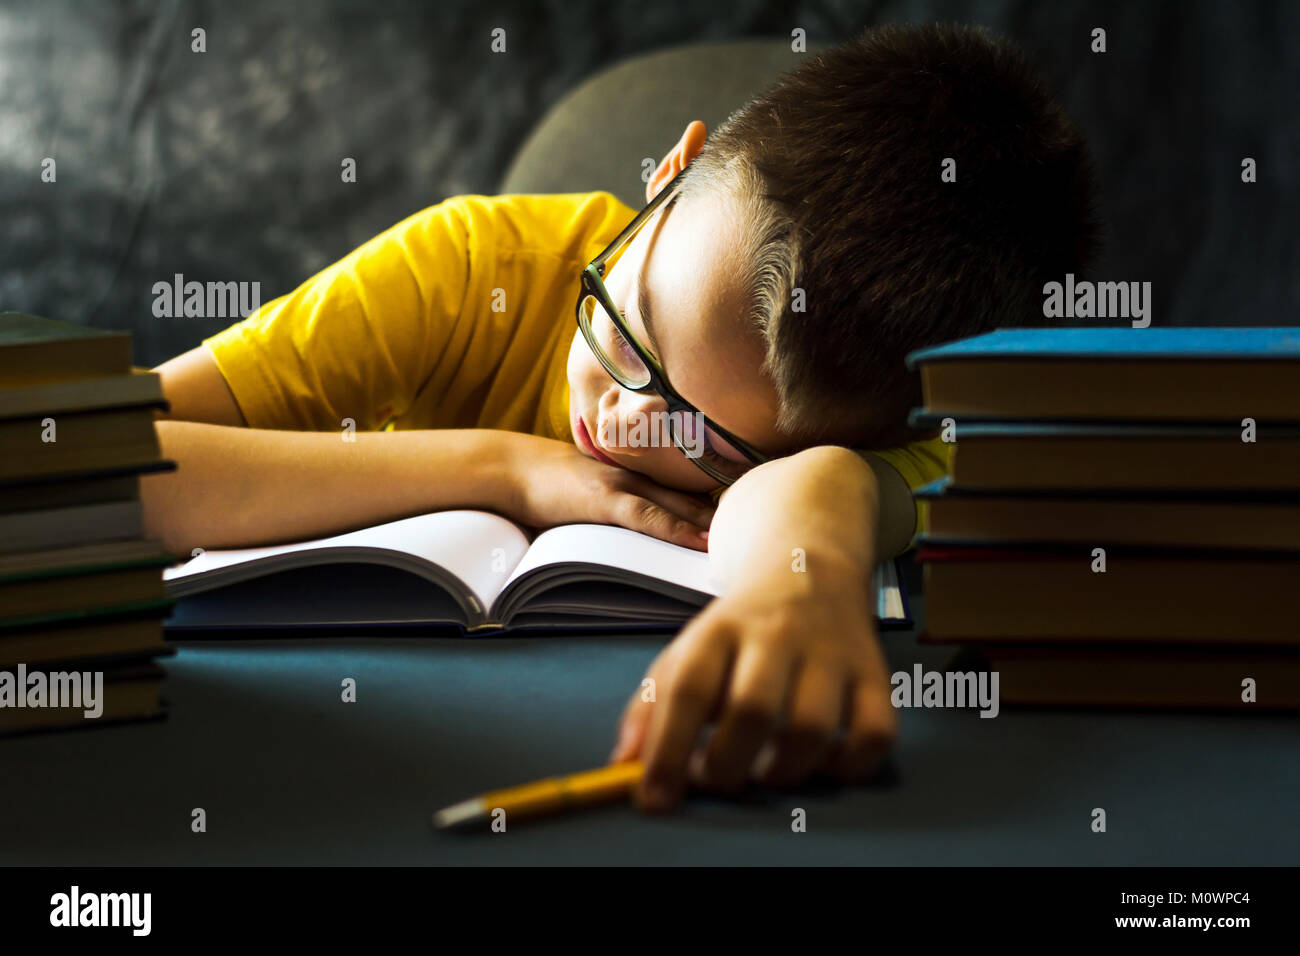 Schoolboy sleeping on the table while finishing homework Stock Photo